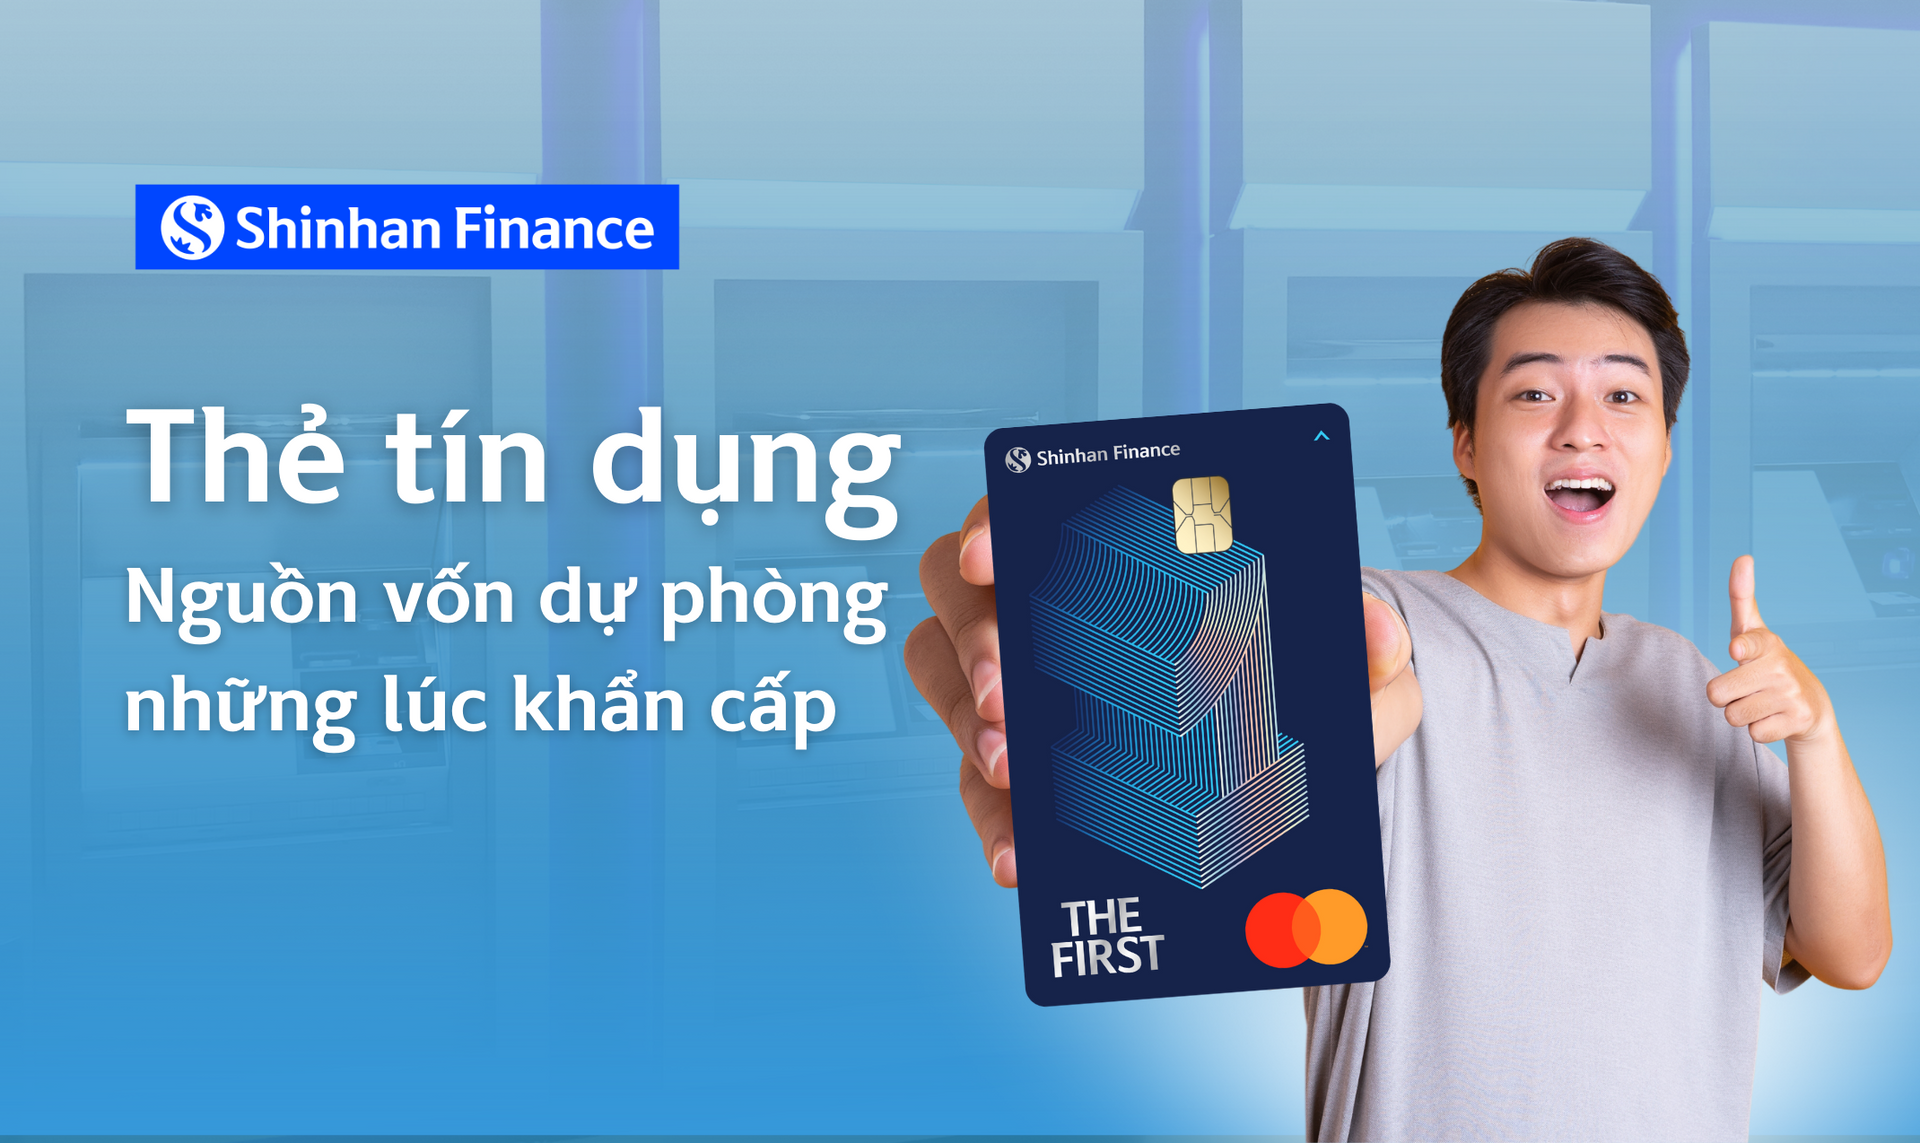 shinhan-finance-the-tin-dung-nguon-von-du-phong-trong-nhung-luc-khan-cap-vie.png